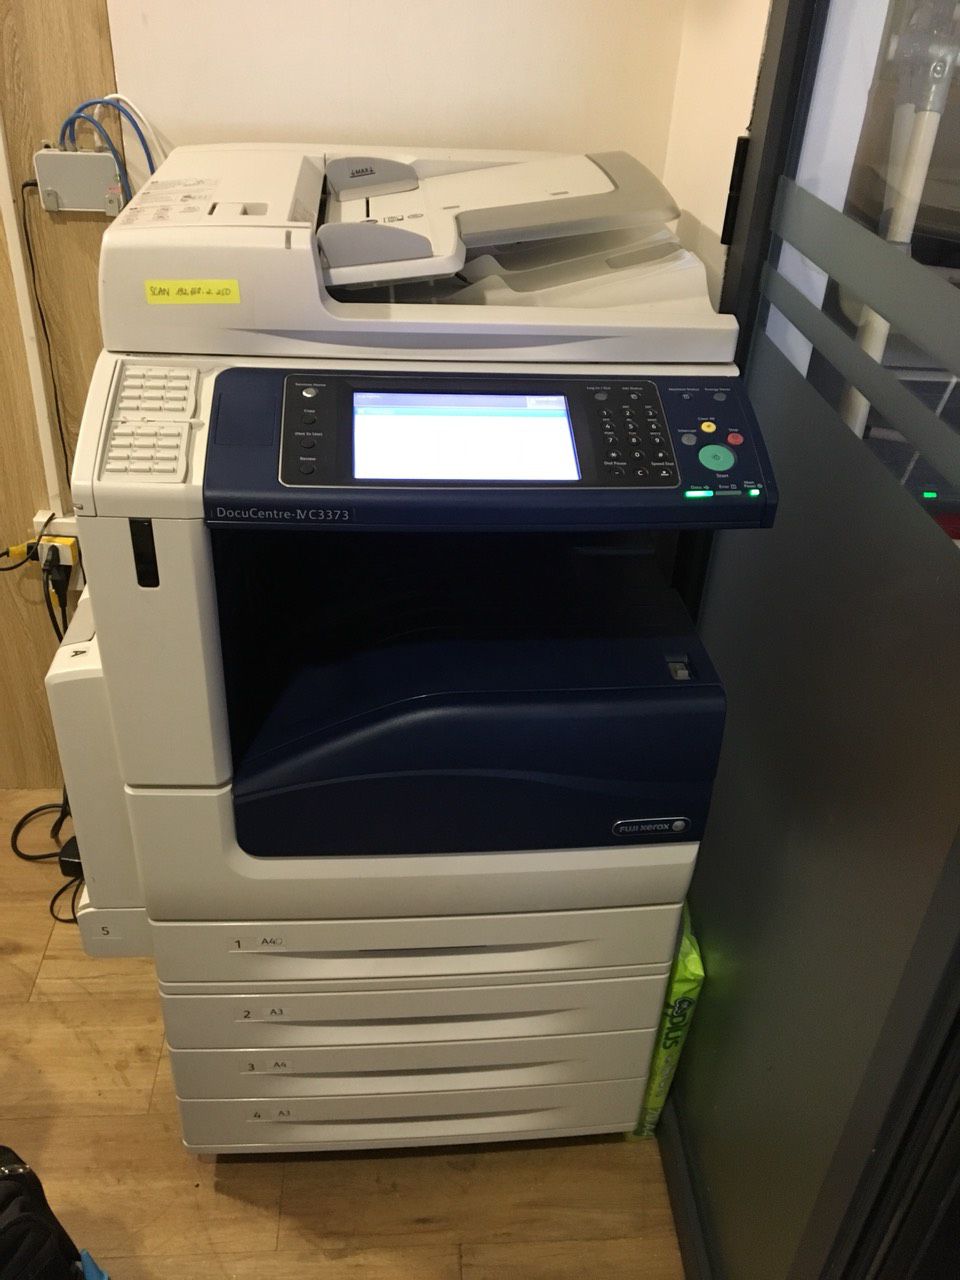 Chọn thuê máy photocopy hay máy in